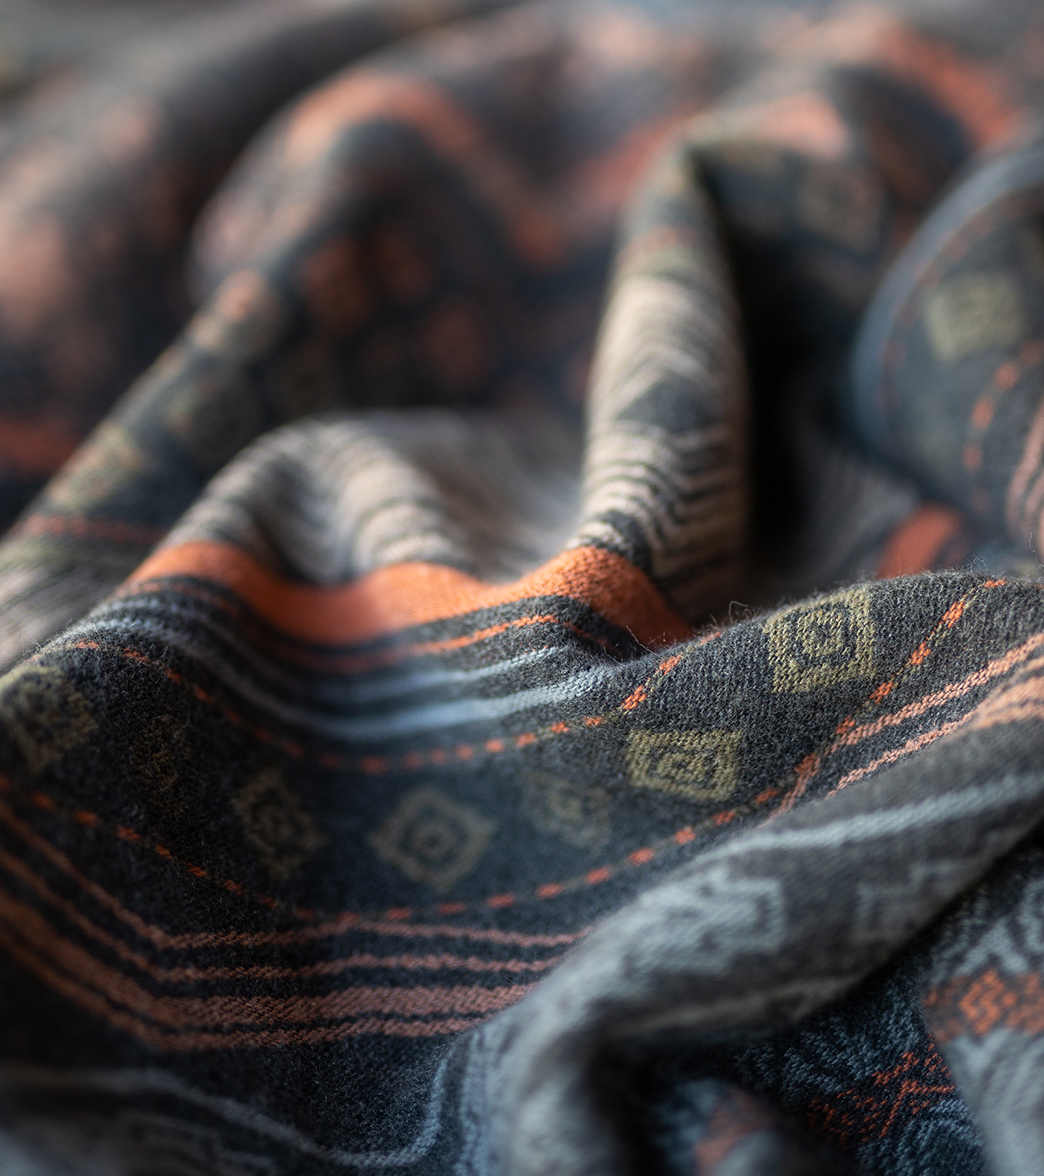 biederlack.de in | Germany made blankets high-quality